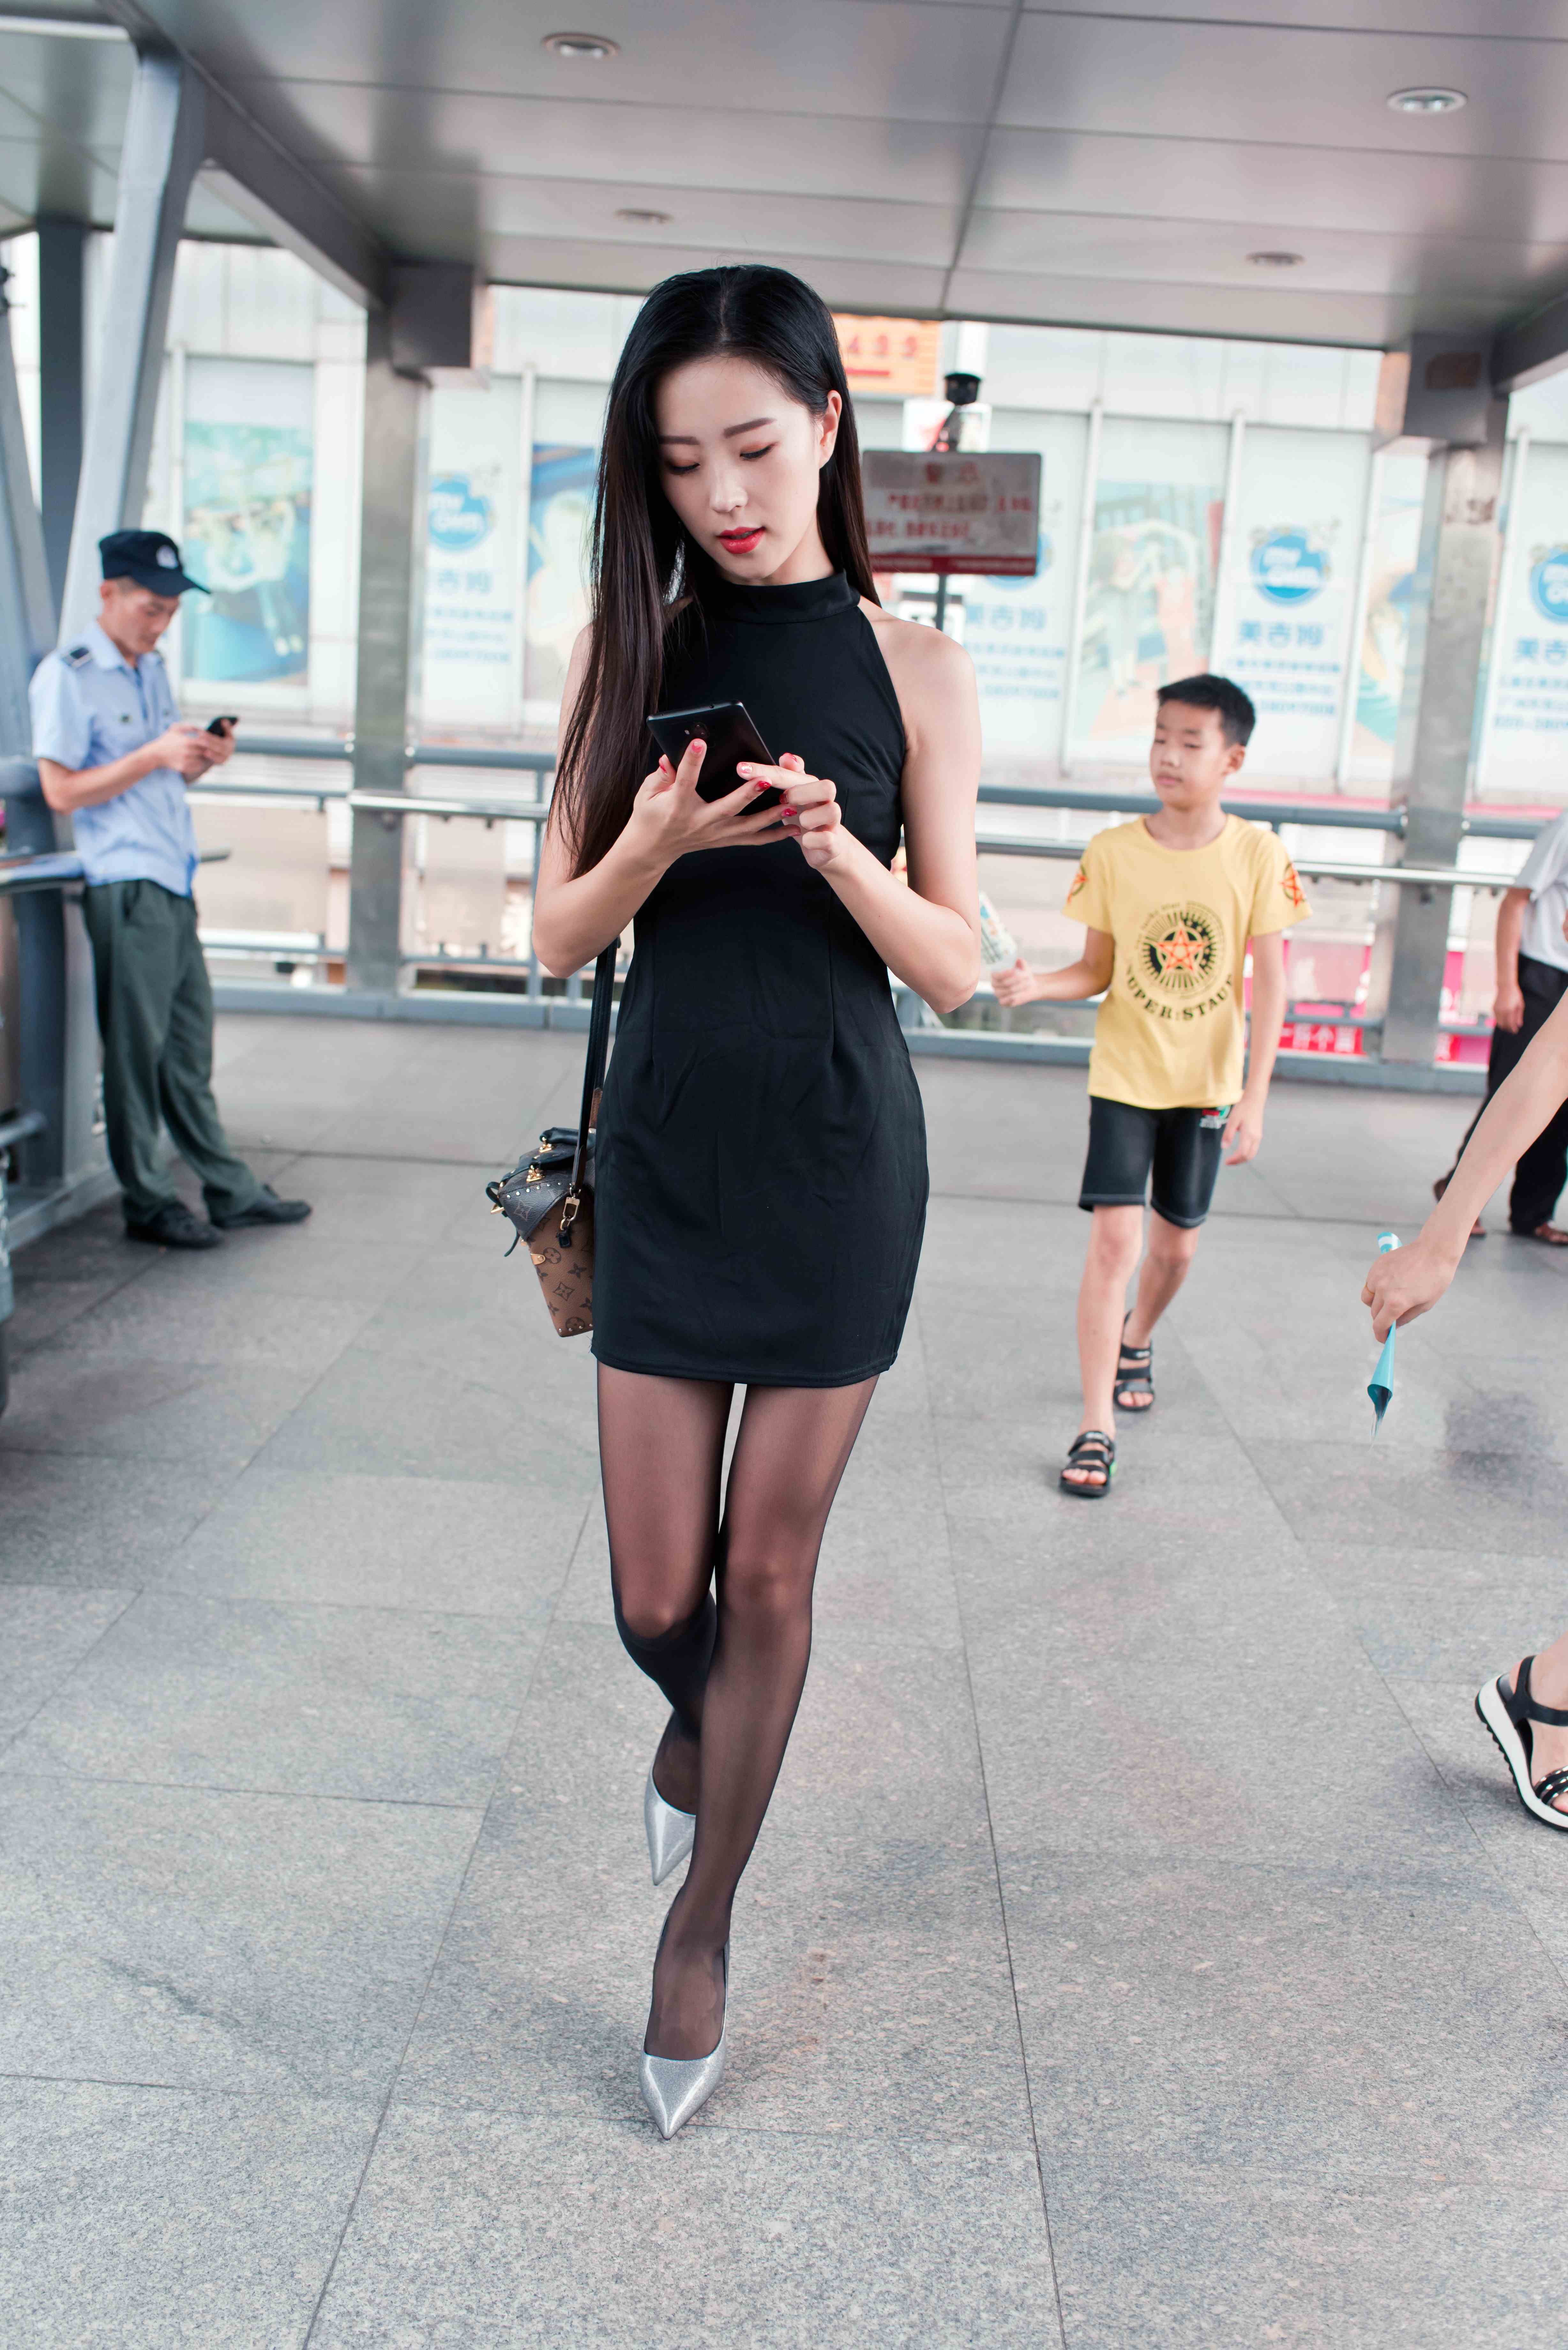 China Beauty Legs and feet 710